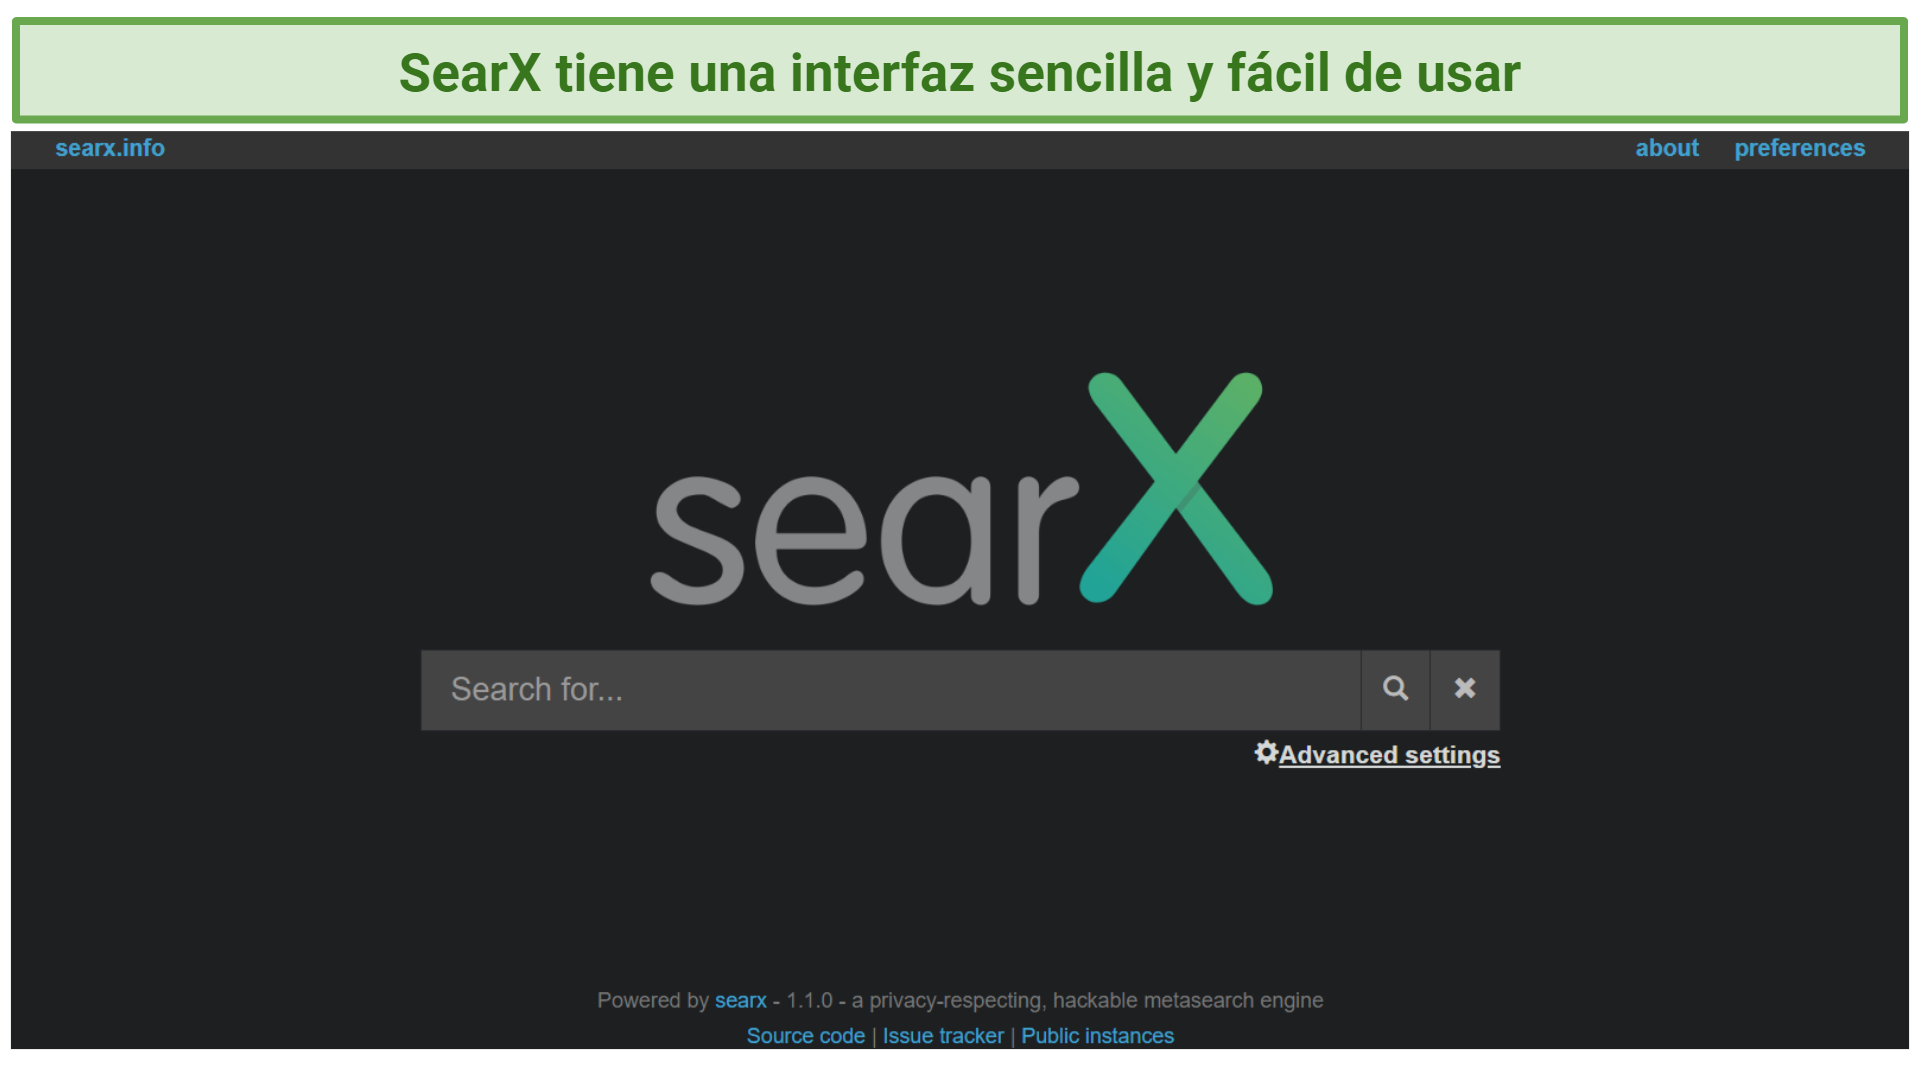 A screenshot showing SearX has a clean interface